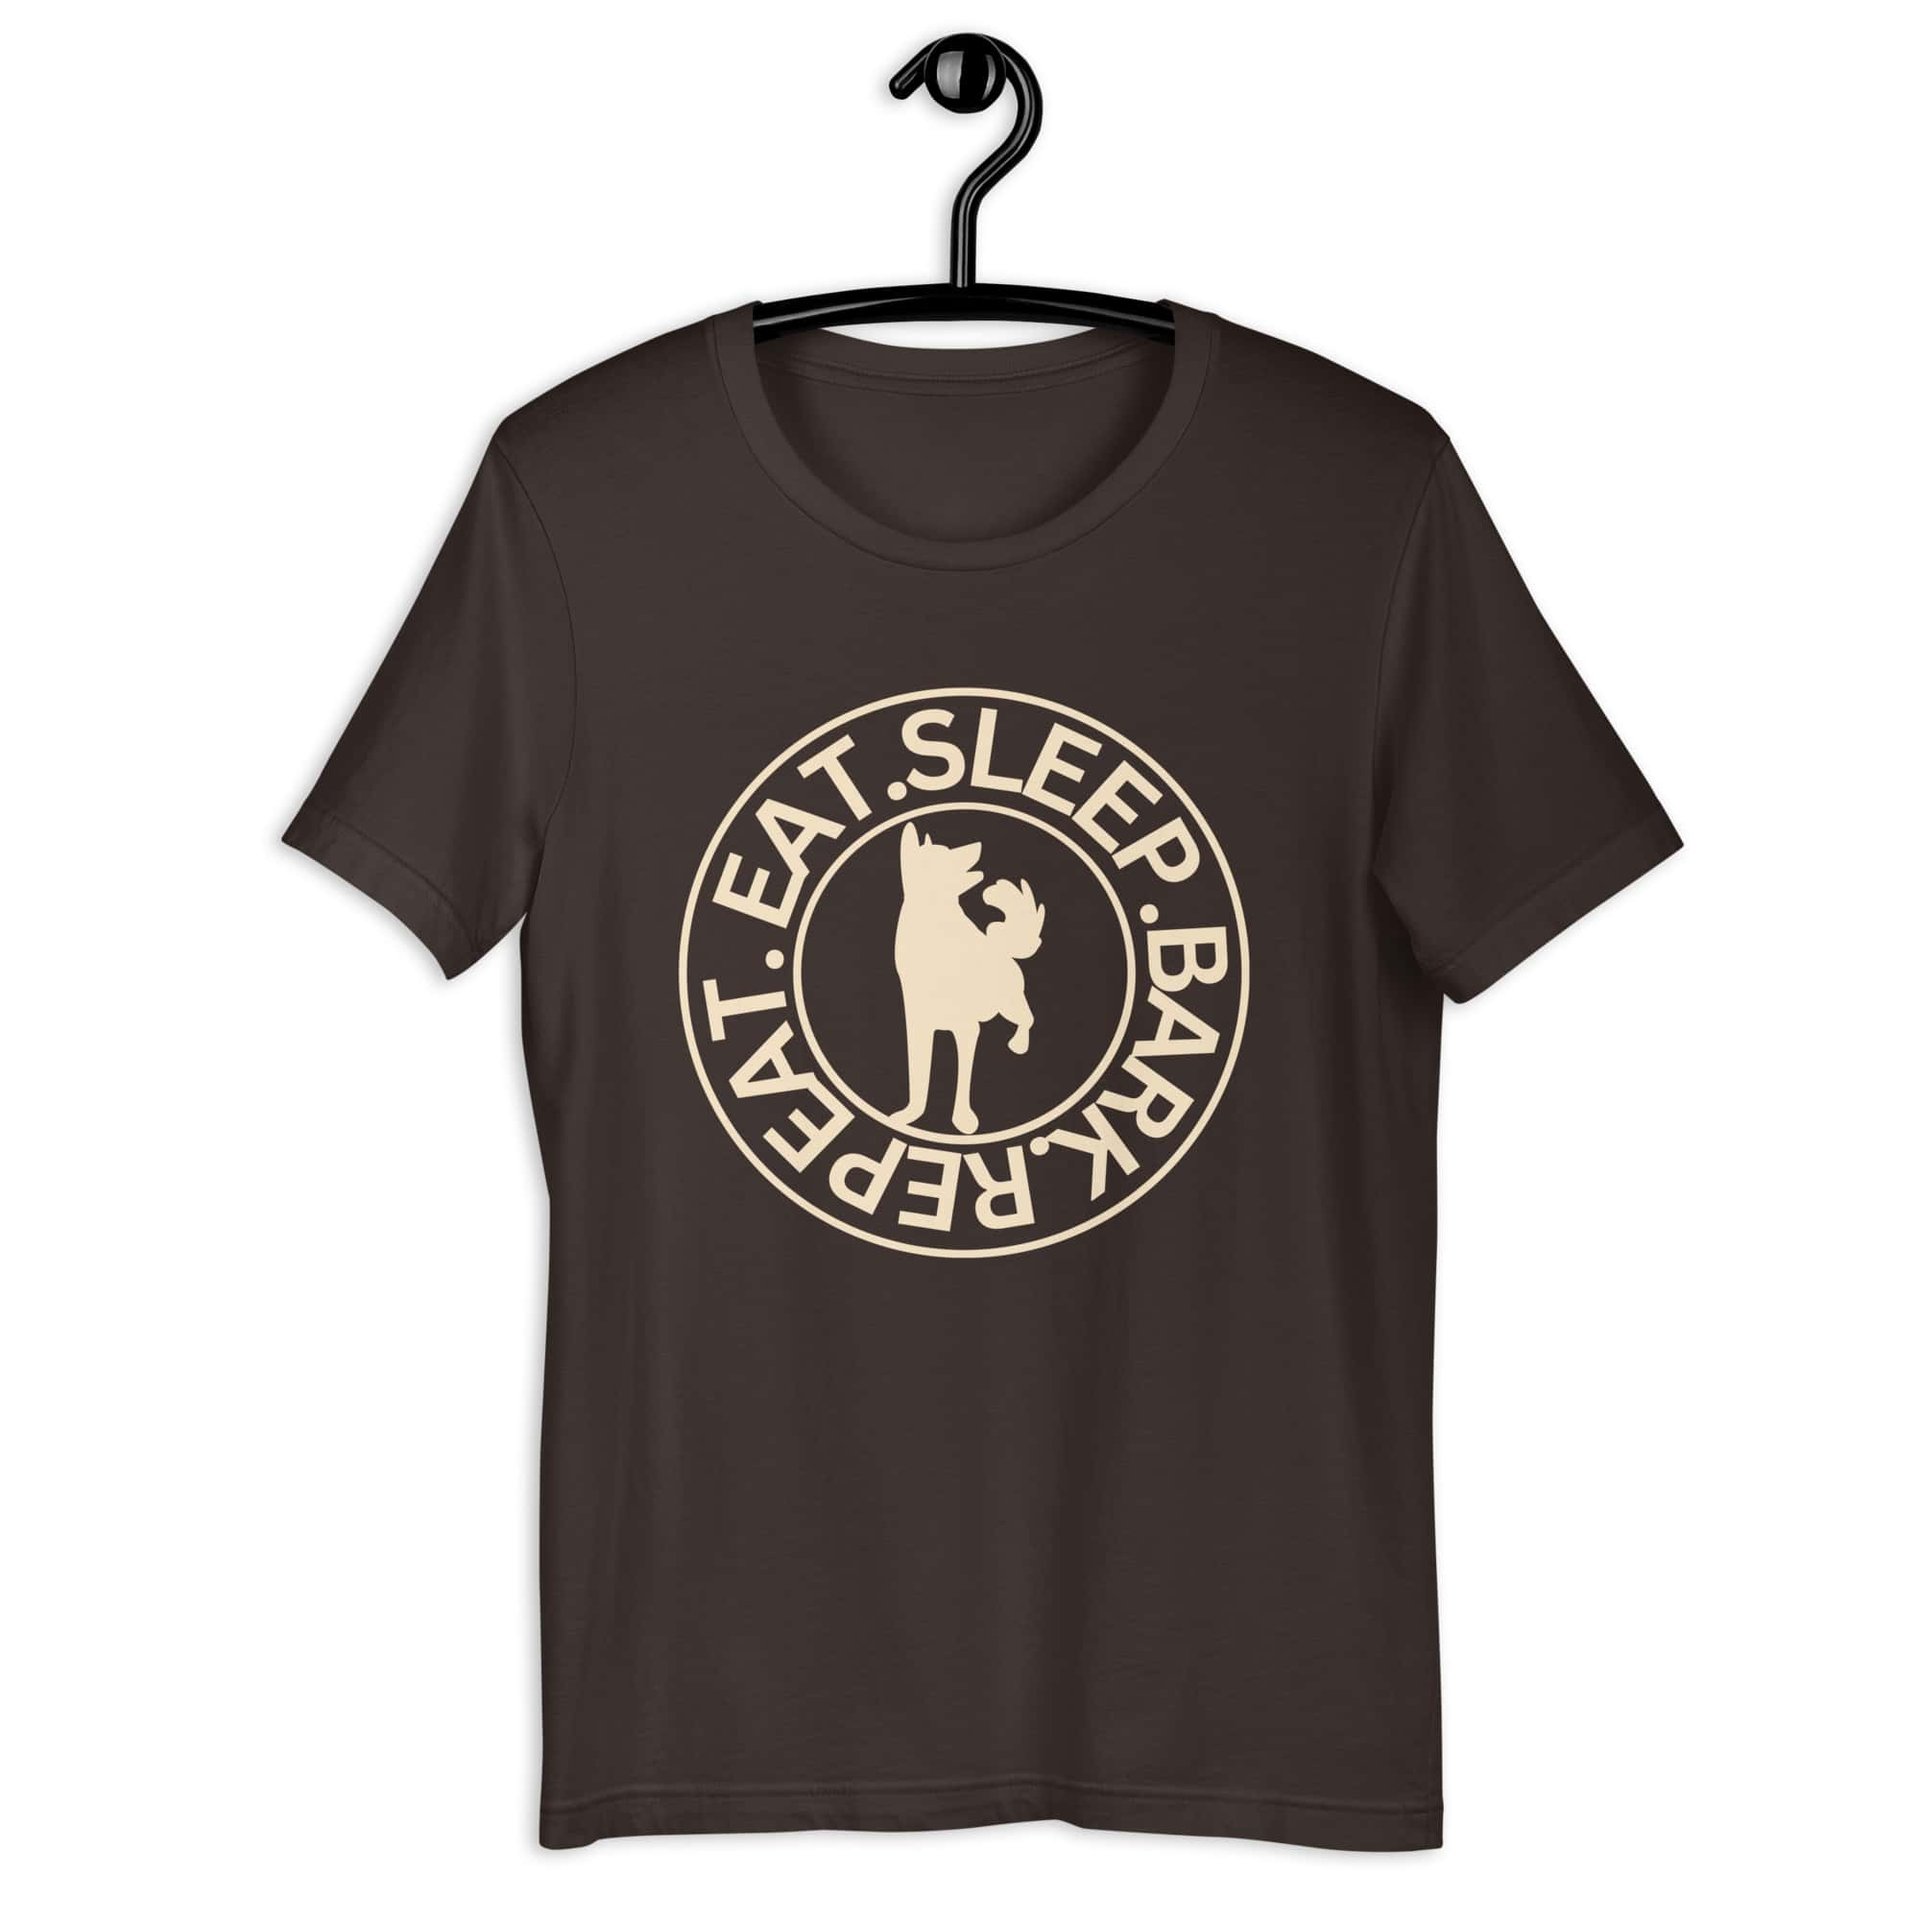 Eat Sleep Bark Repeat Shepherd Unisex T-Shirt. Brown